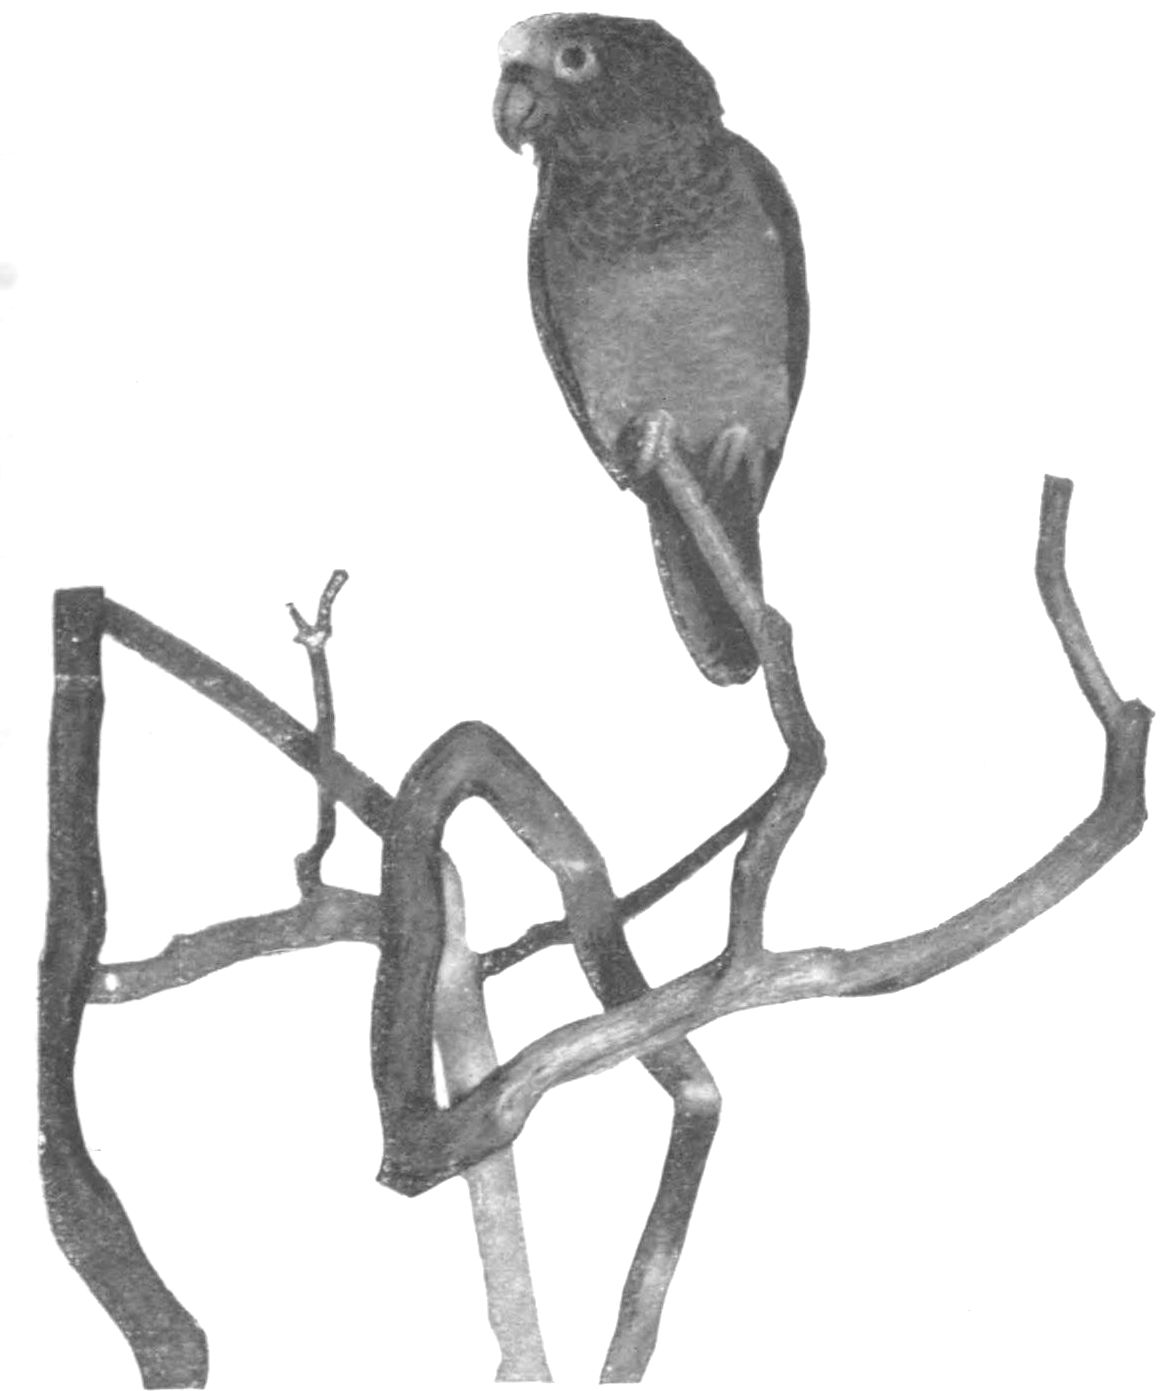 [Photograph of bird on tree branch]